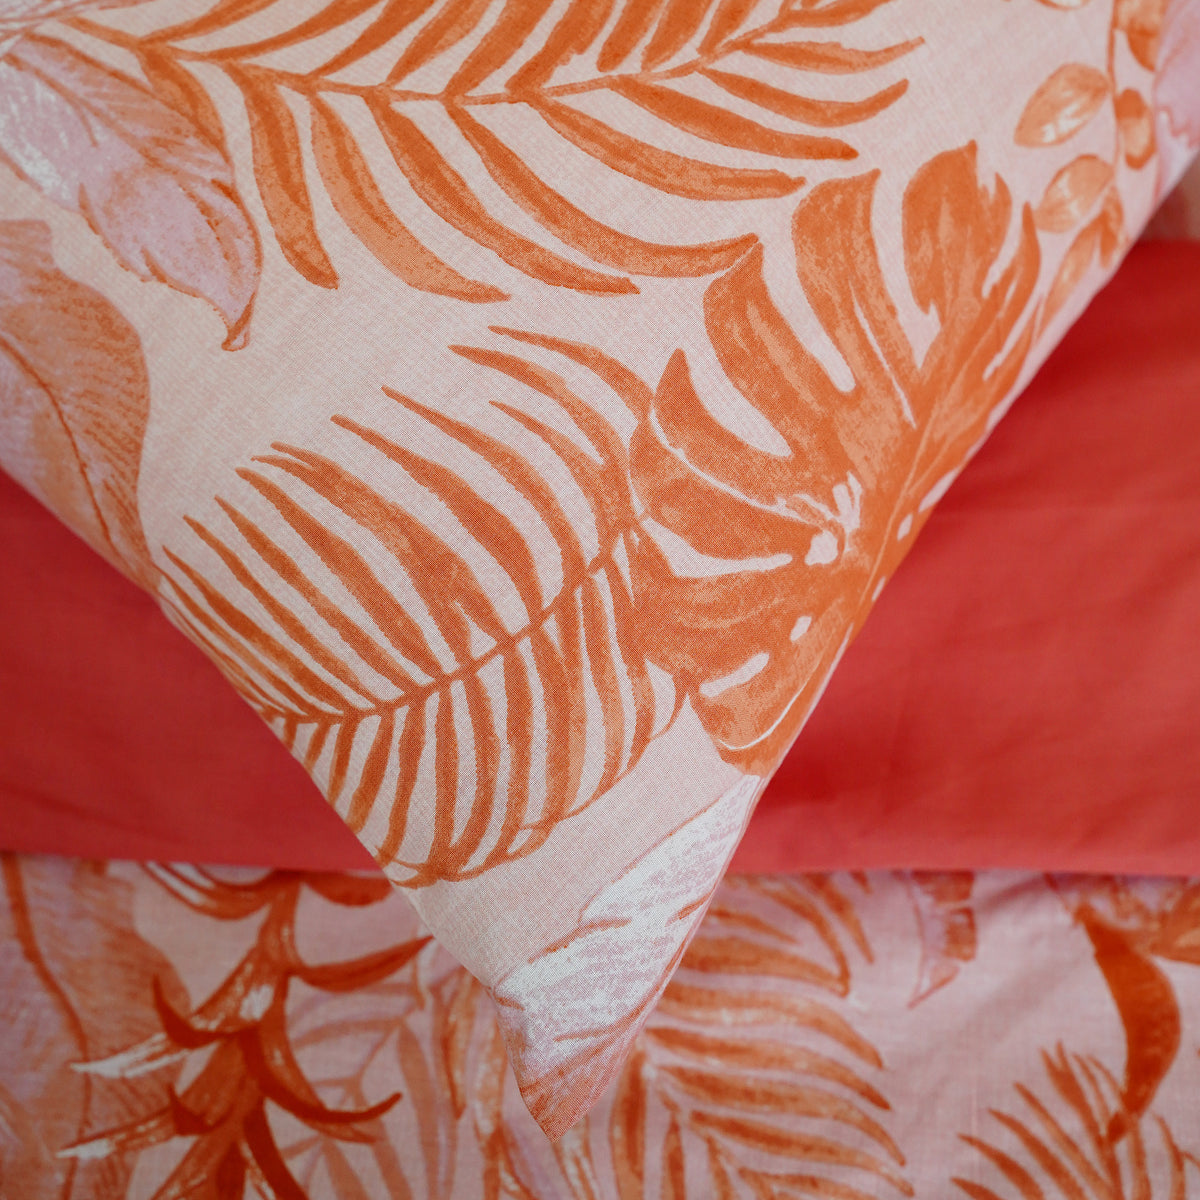 Peachy Palm King Duvet Cover & Comforter Set